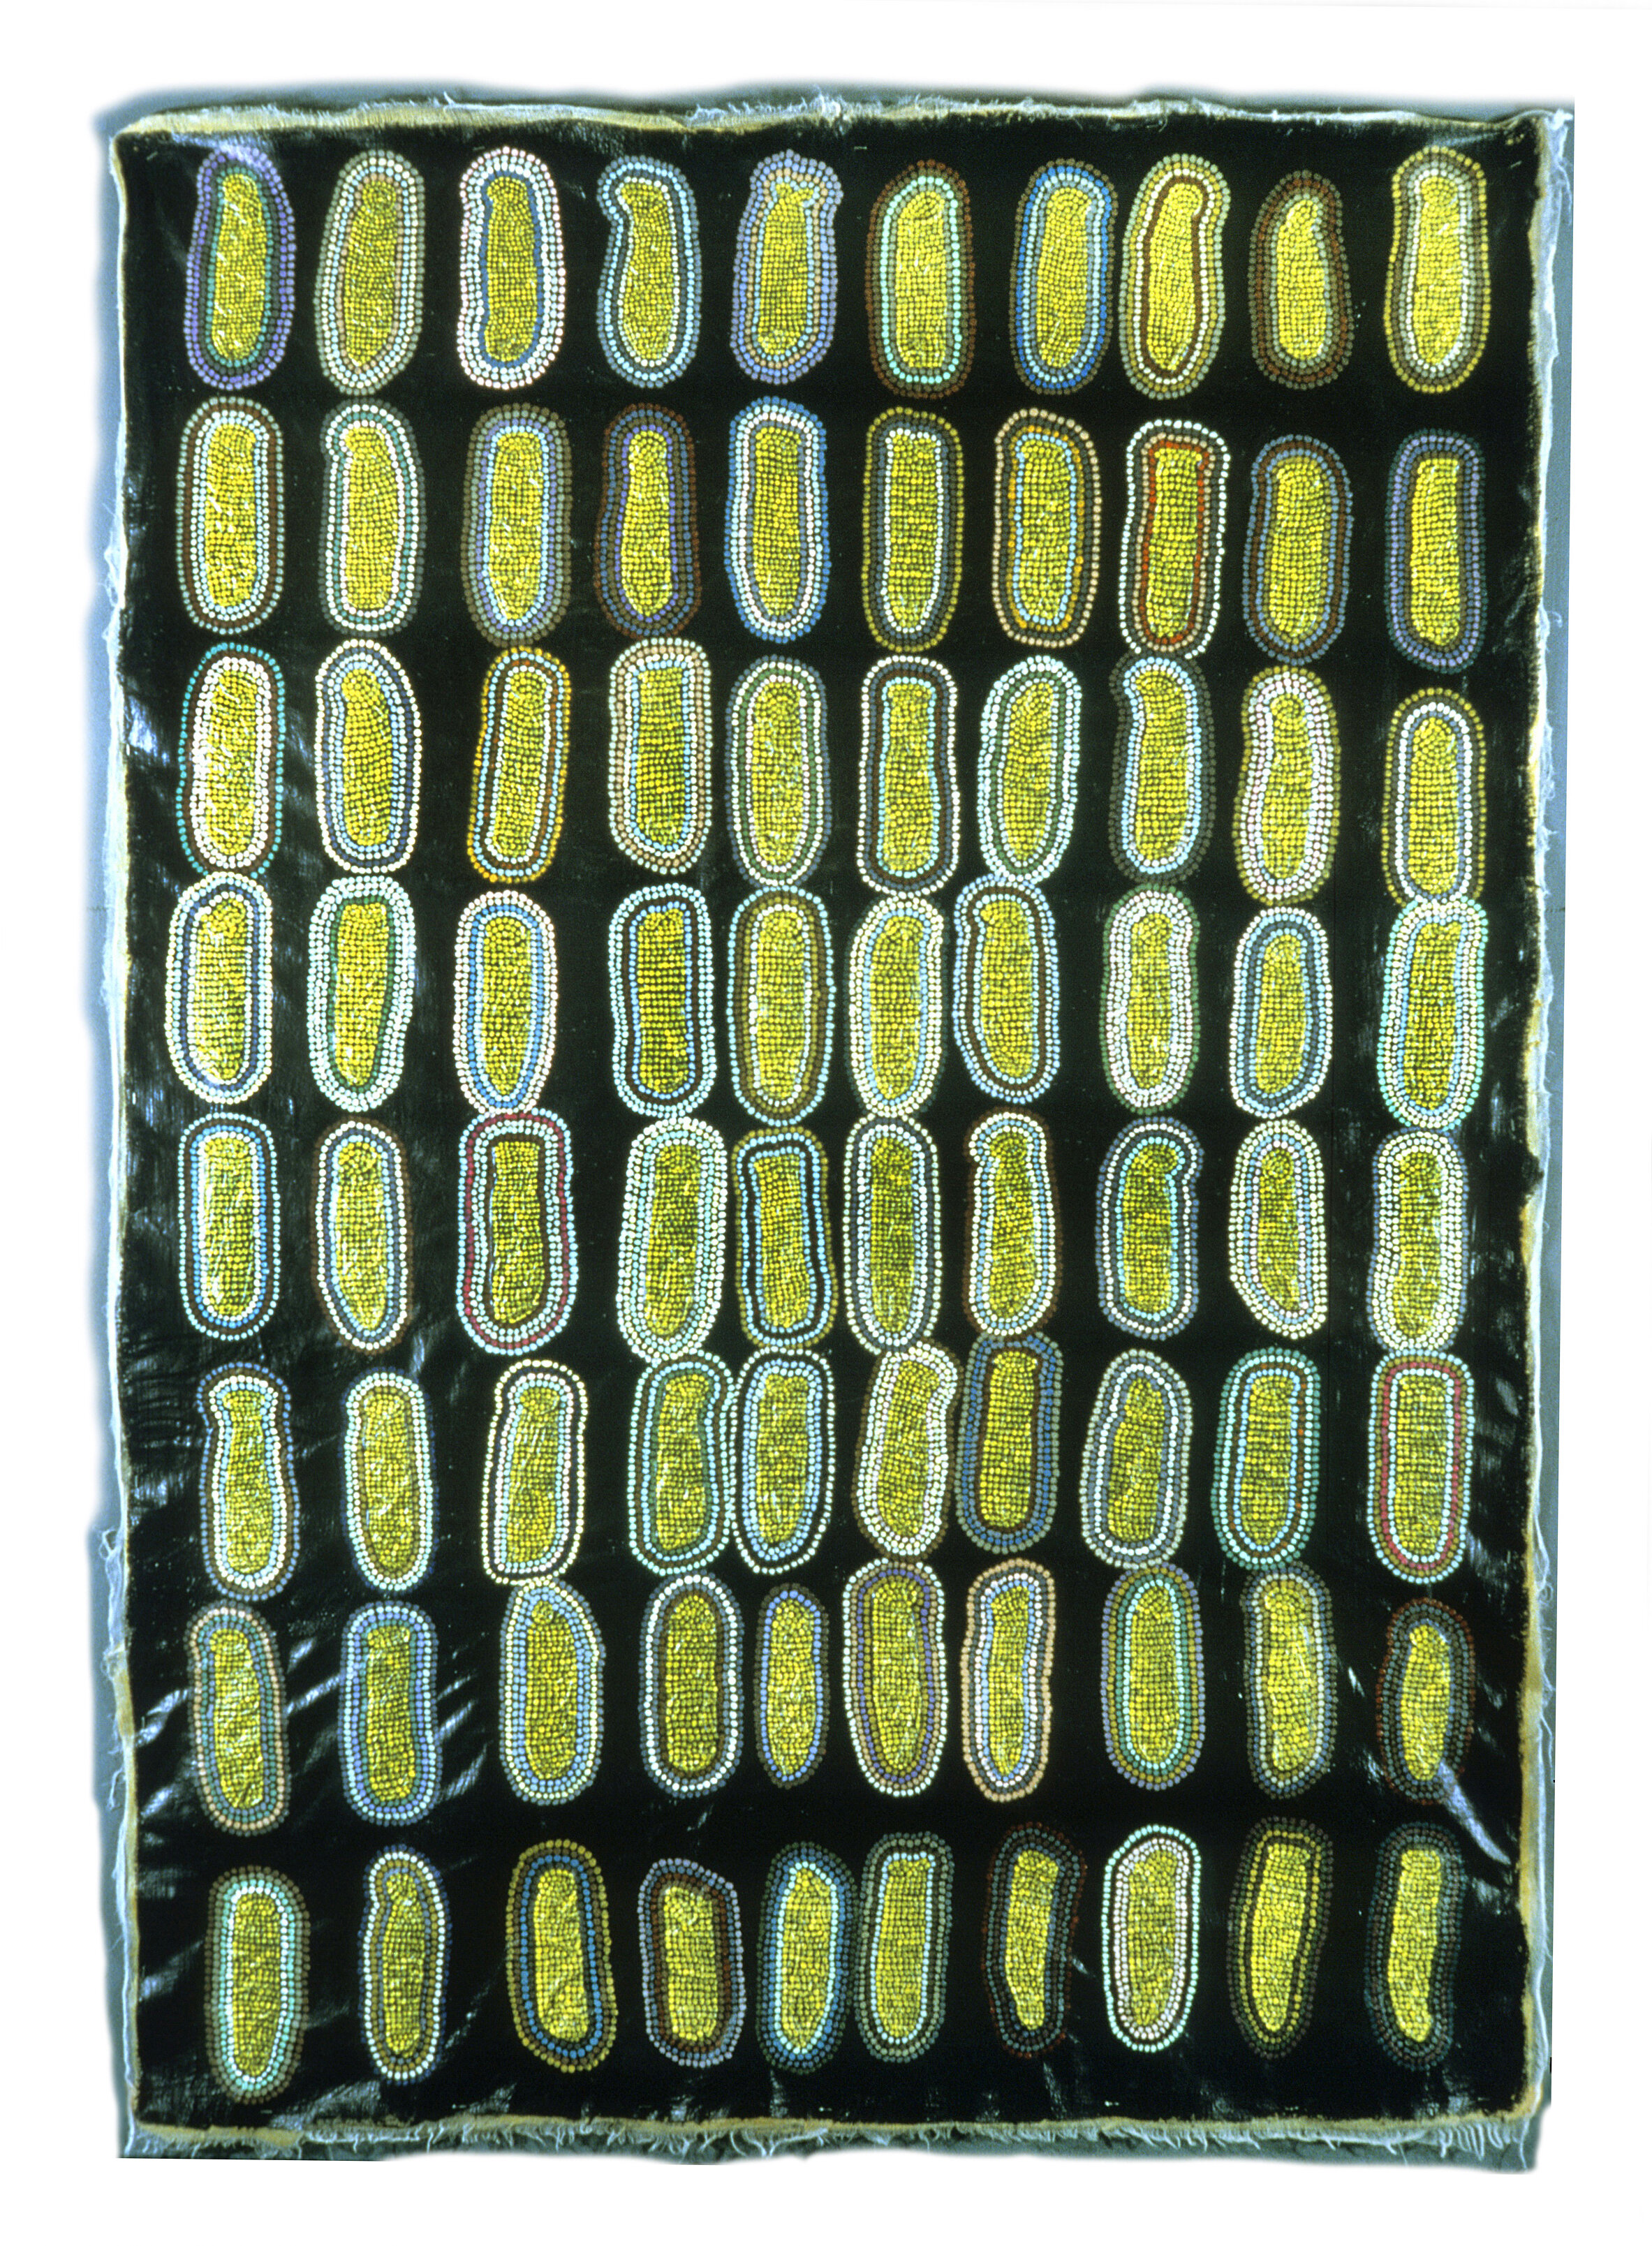  Haloed Condom Relief Piece, 1972, acrylic, rubber latex, neoprene, gauze, condoms, 83 1/2 x 60 inches   